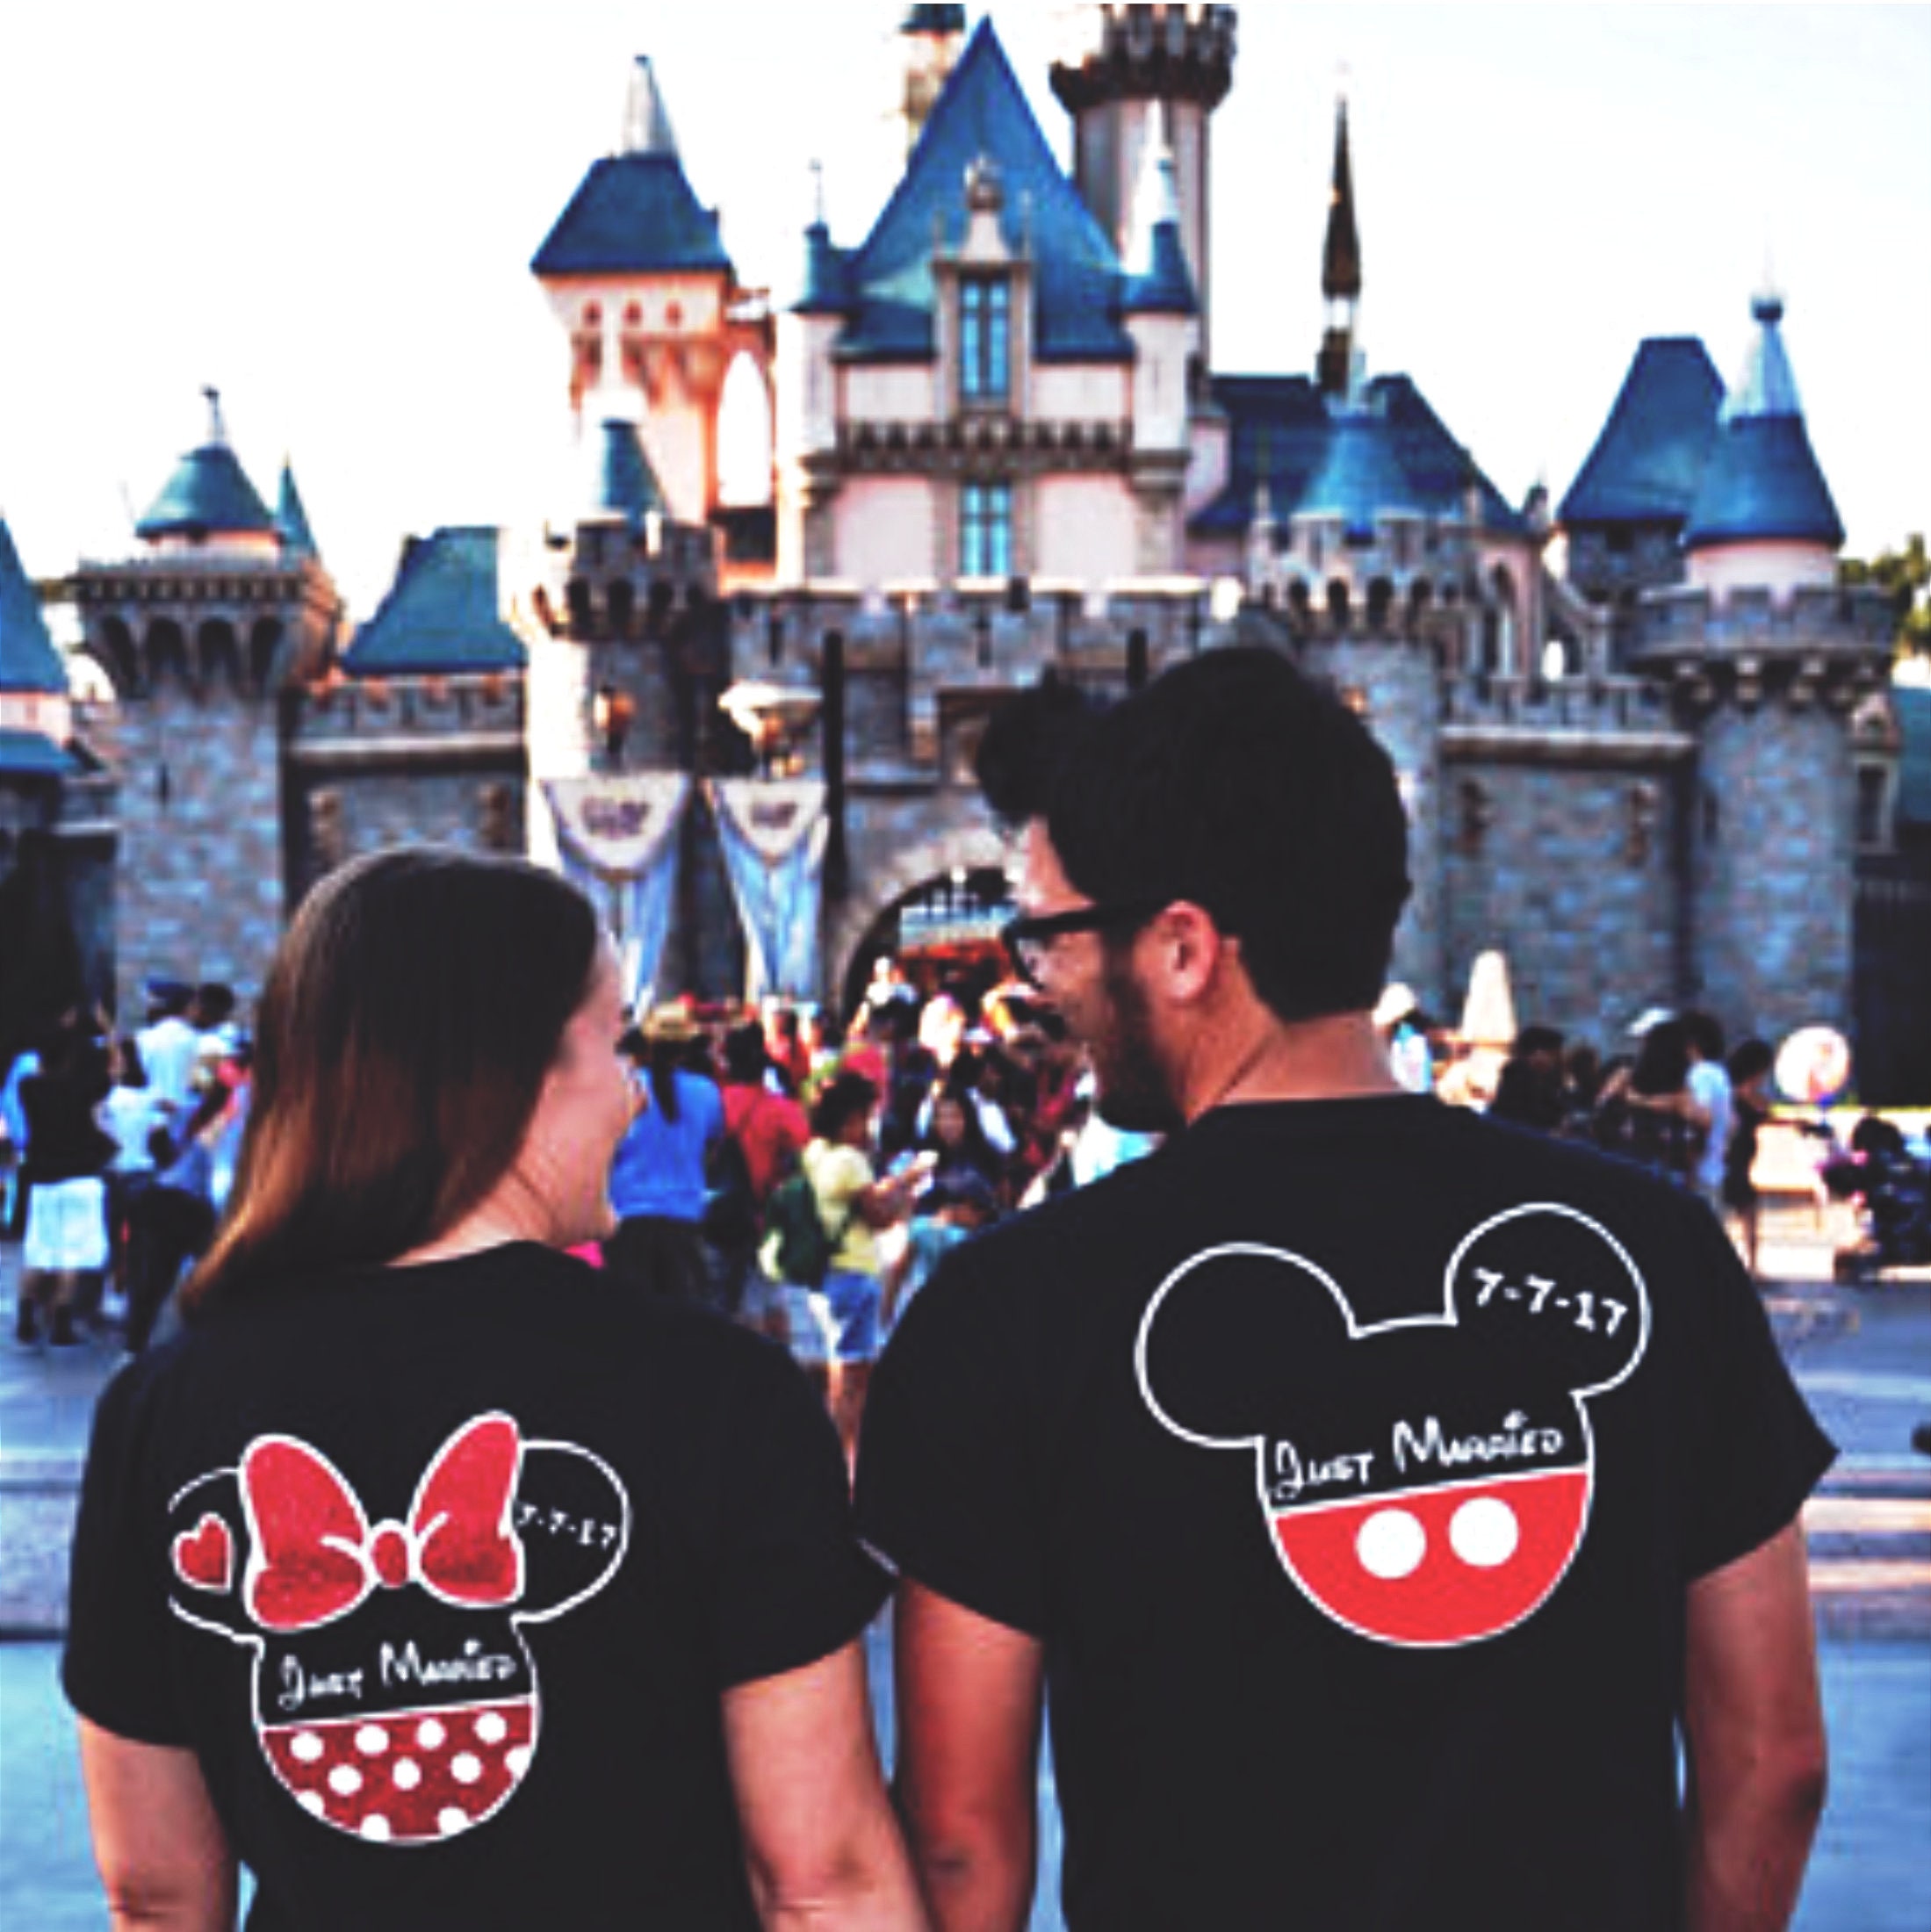 Just Married Shirt Disney Wedding Shirt Disney Matching Shirt Disney Honeymoon Couple Shirt TH-AN Bride and Groom Disney Mickey Shirt